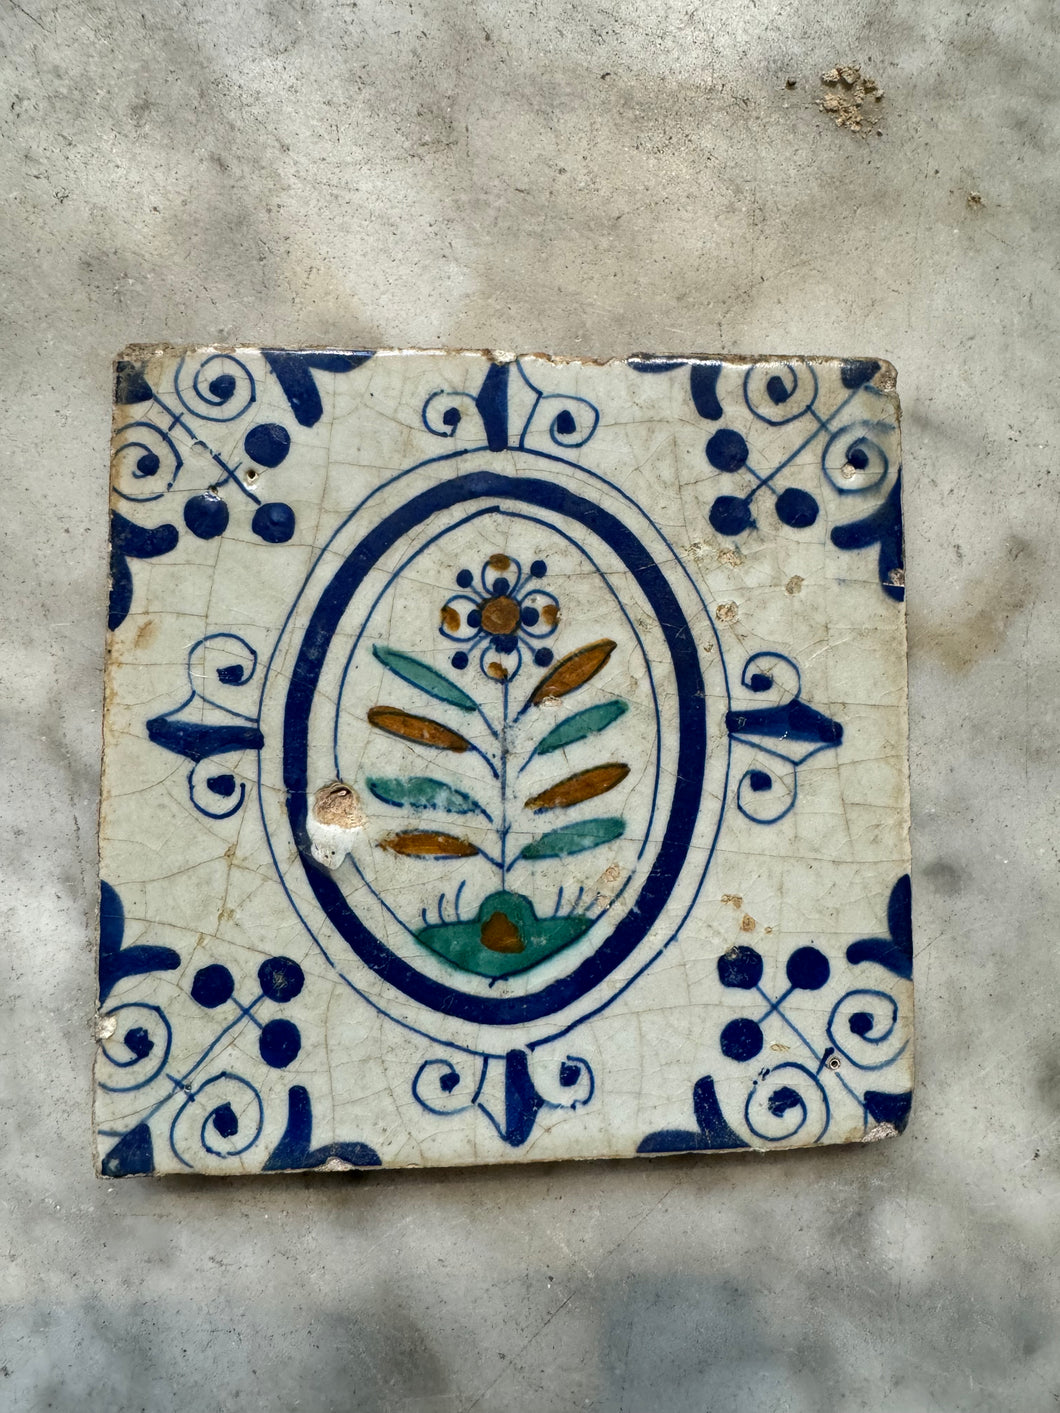 T14) 17th century delft tile flower